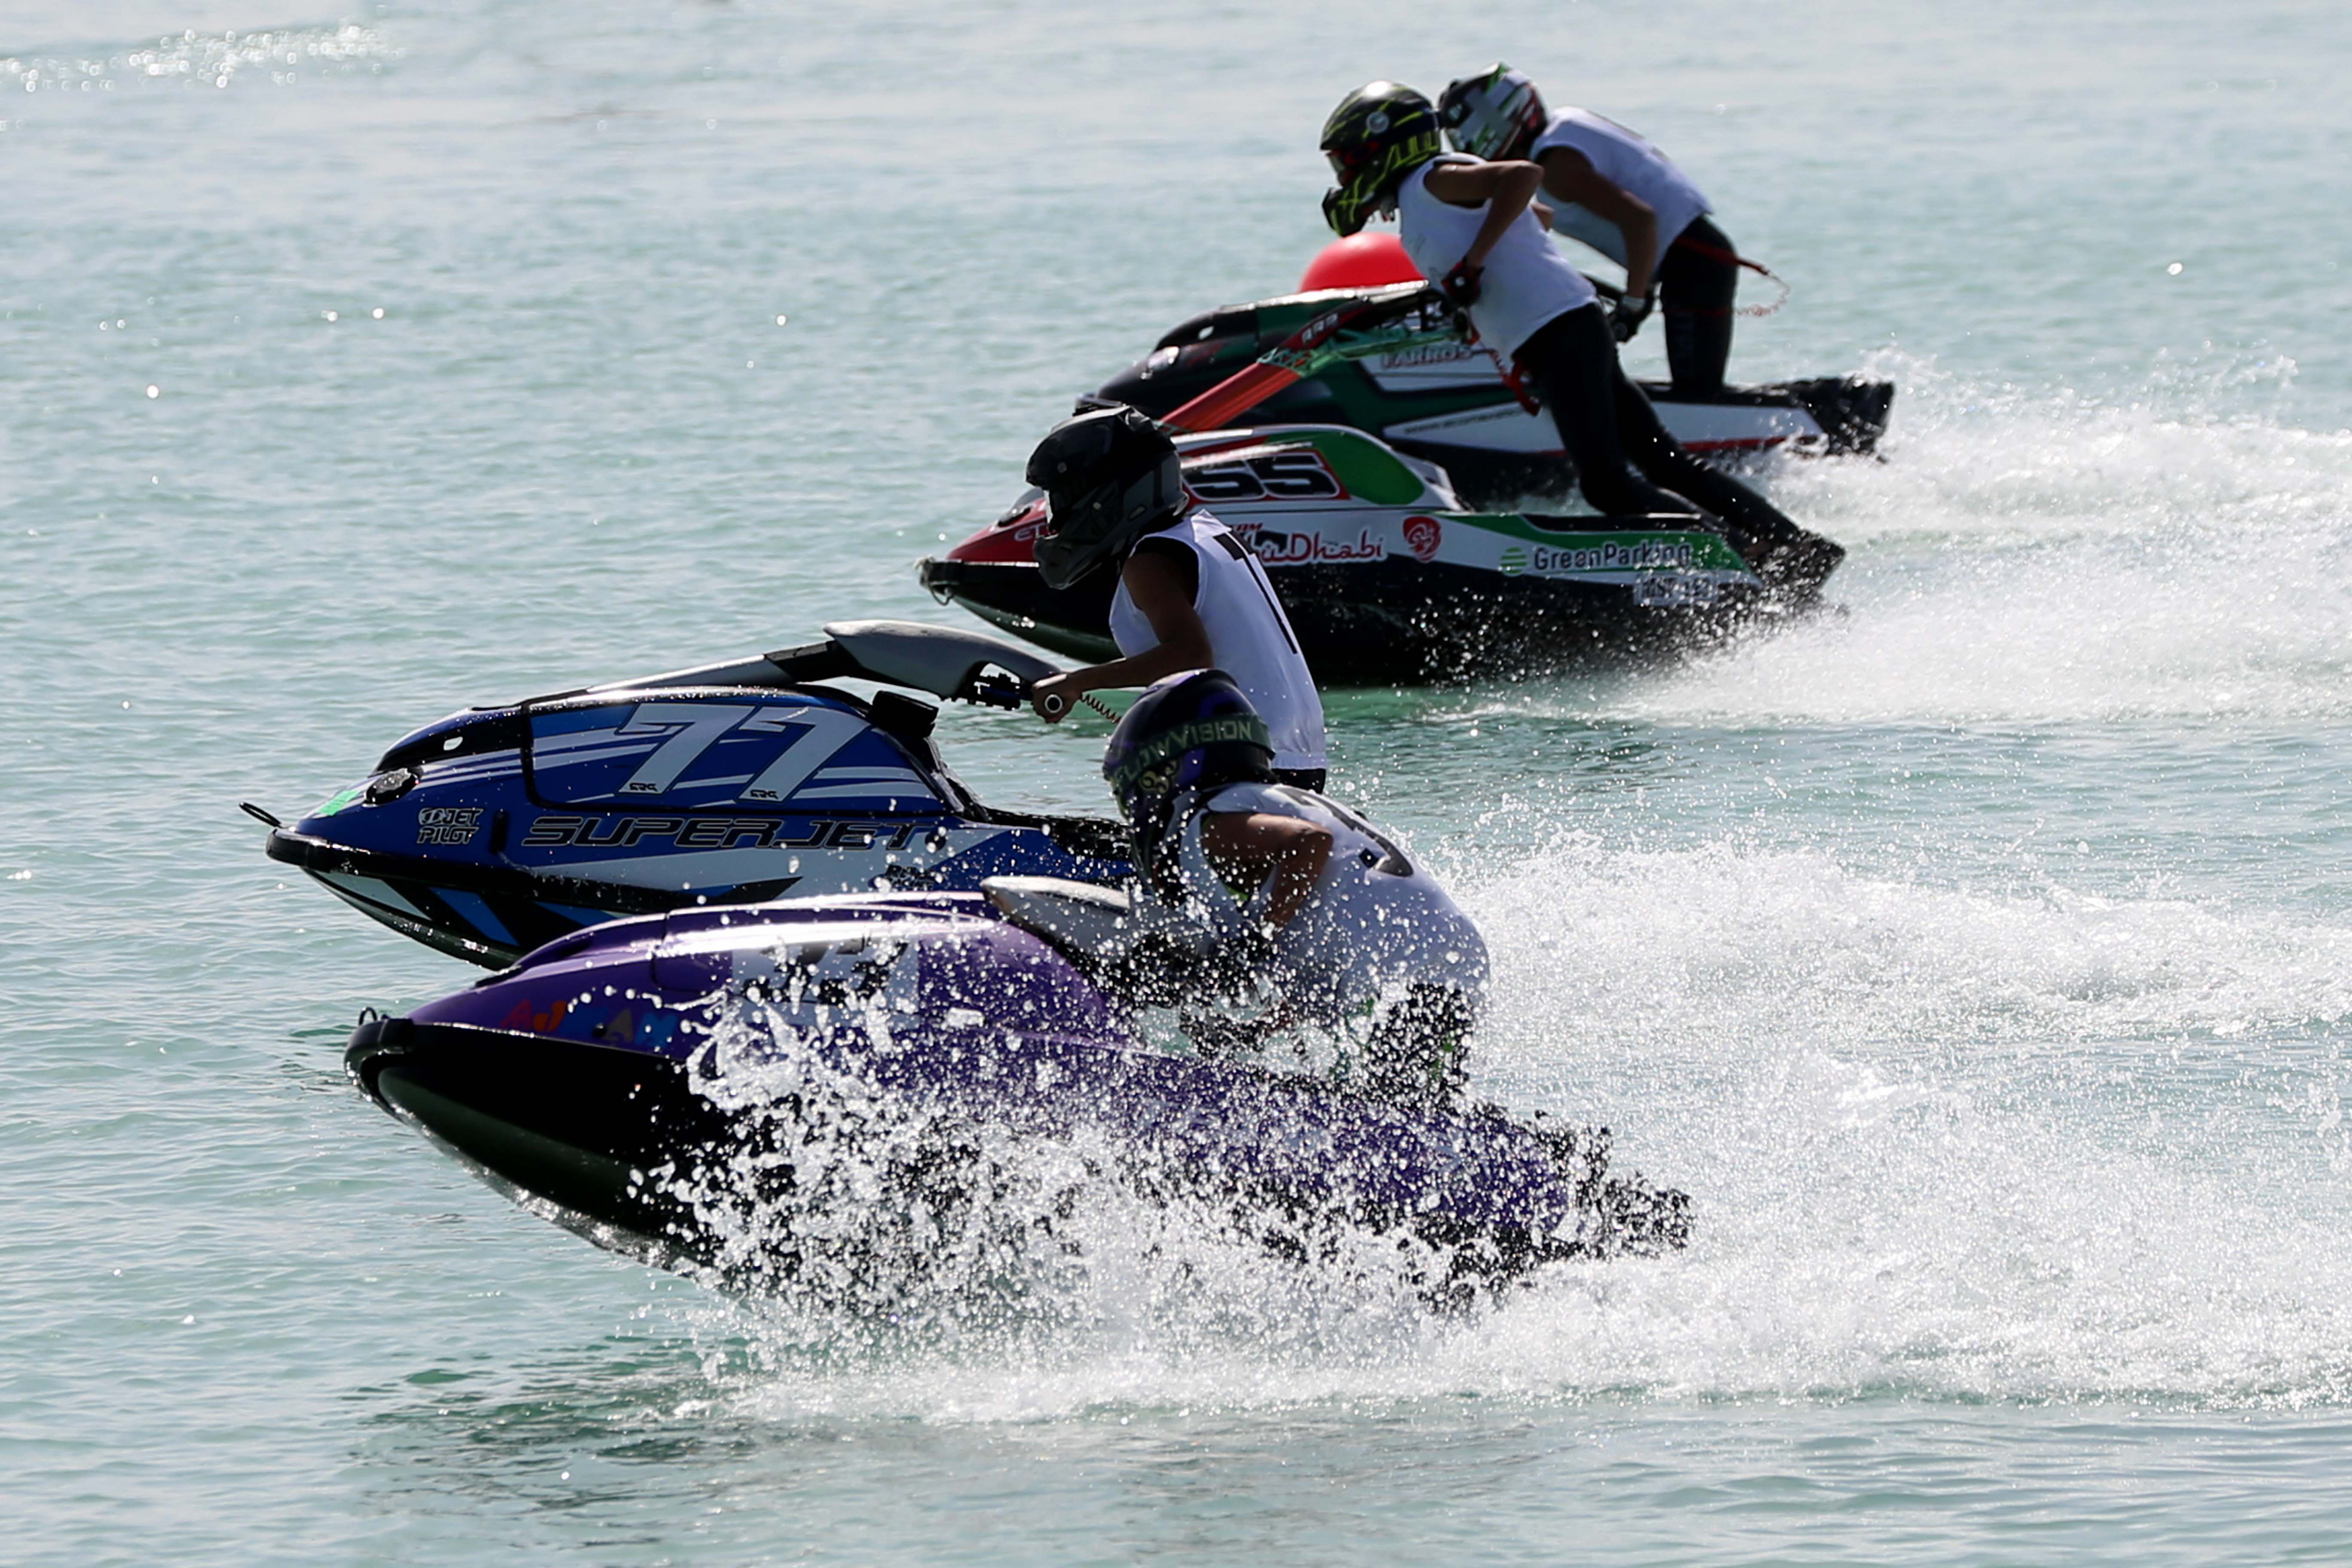 16 Rising Stars participated in Dubai Int'l Aquabike Race